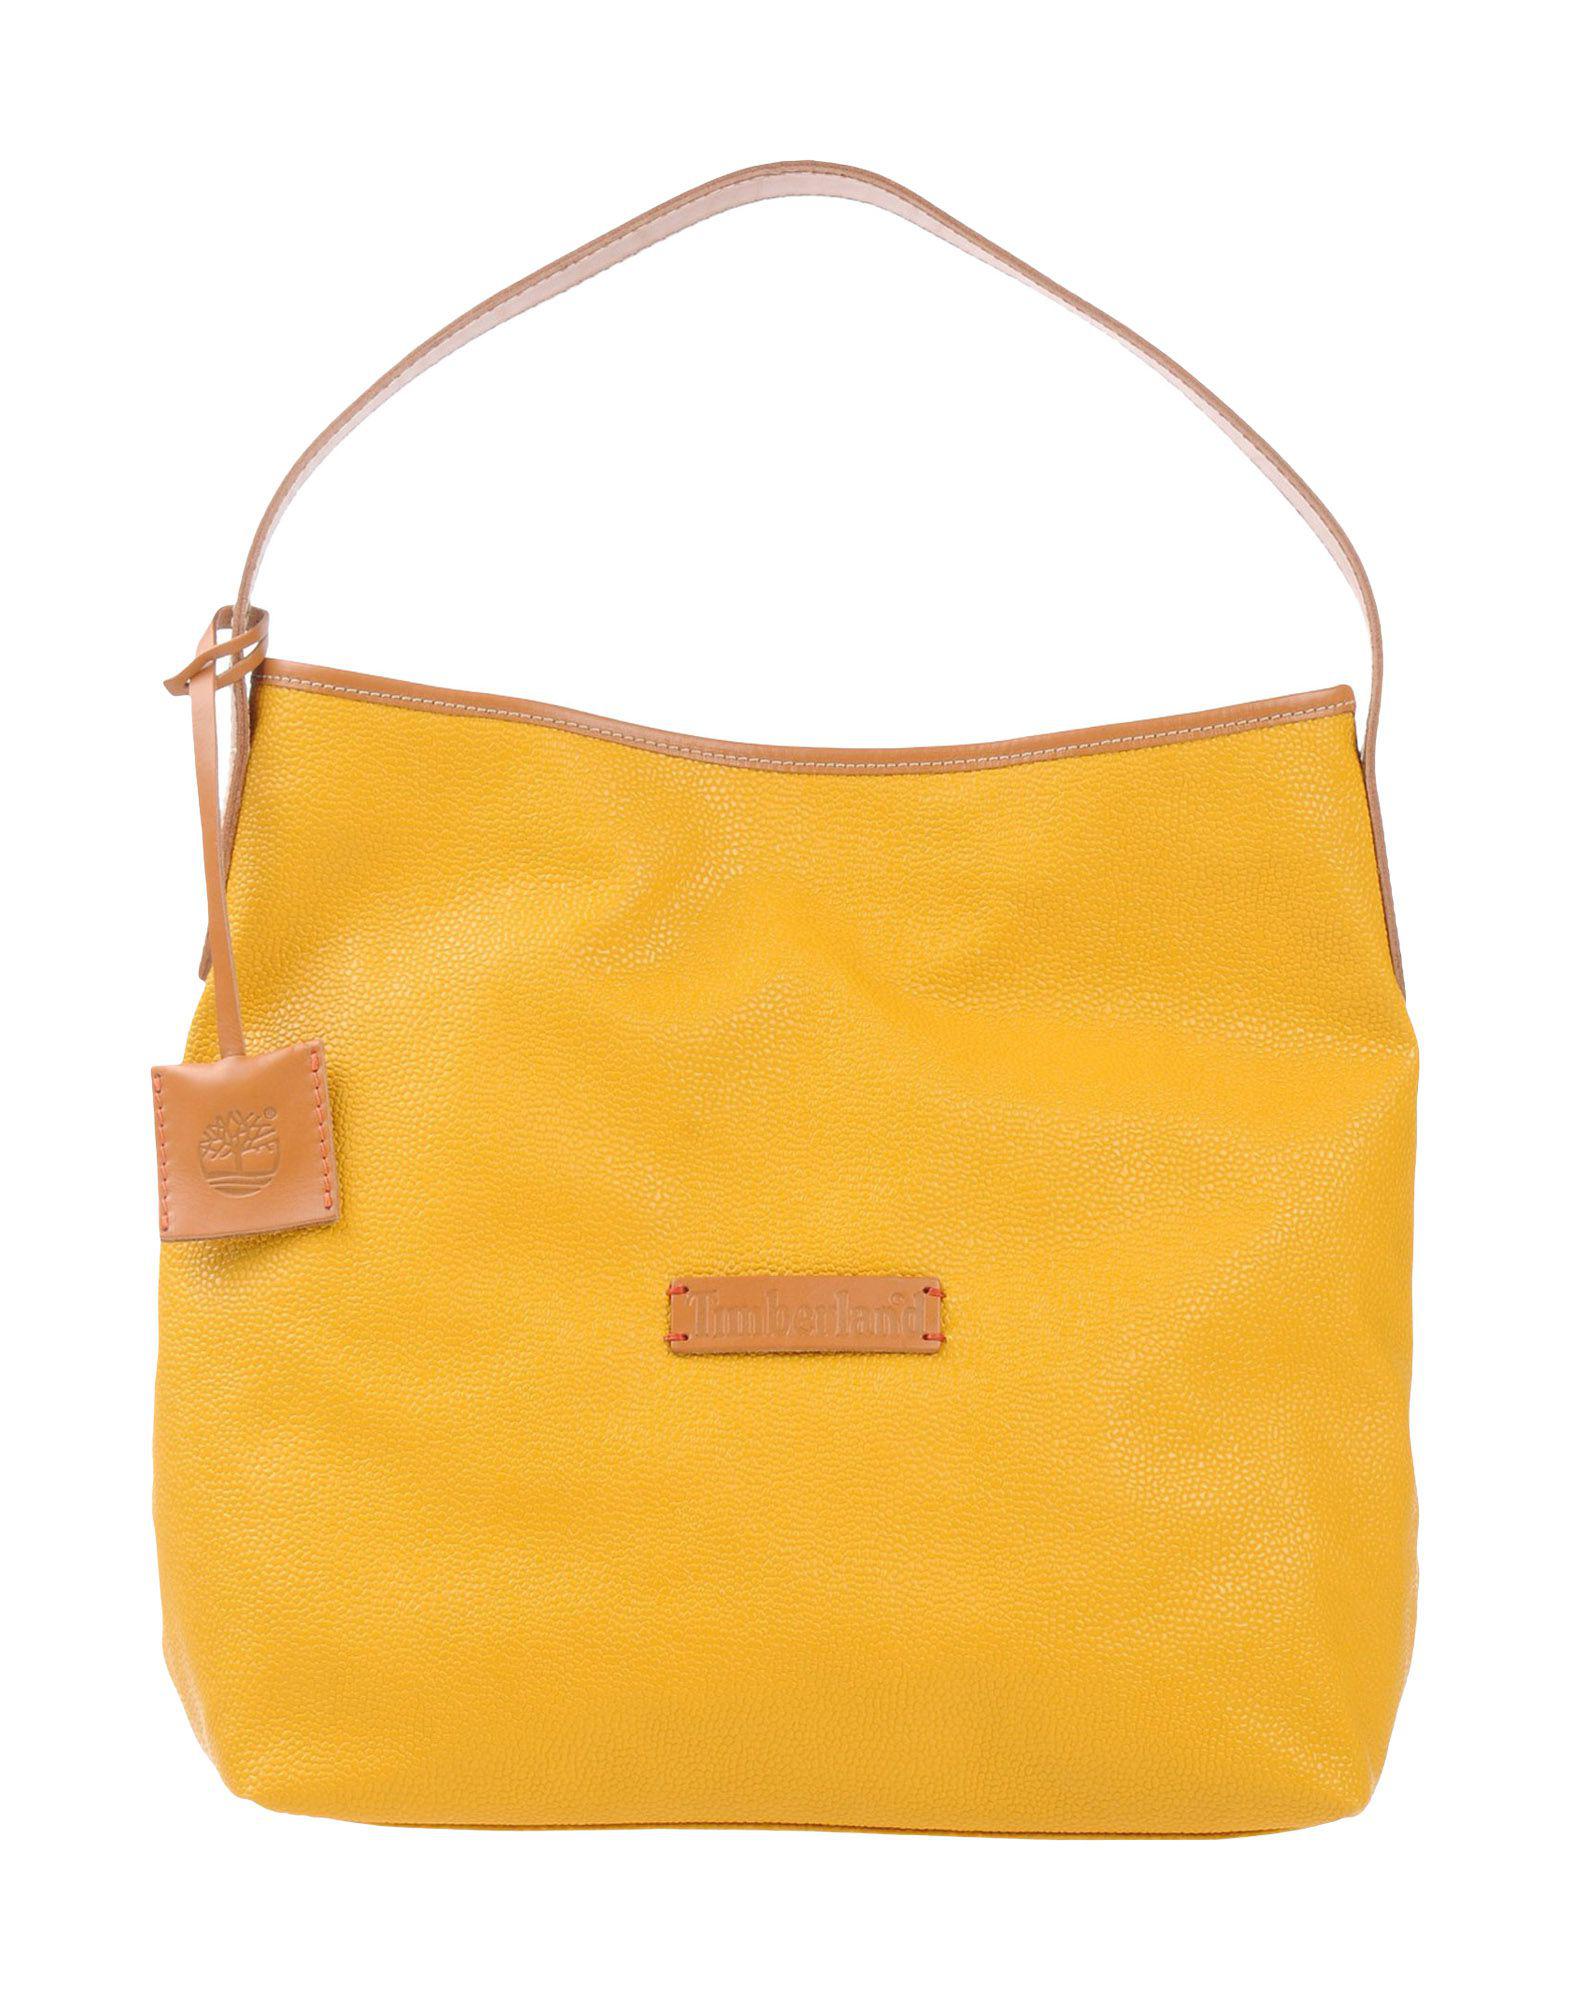 Timberland Leather Handbag in Yellow - Lyst